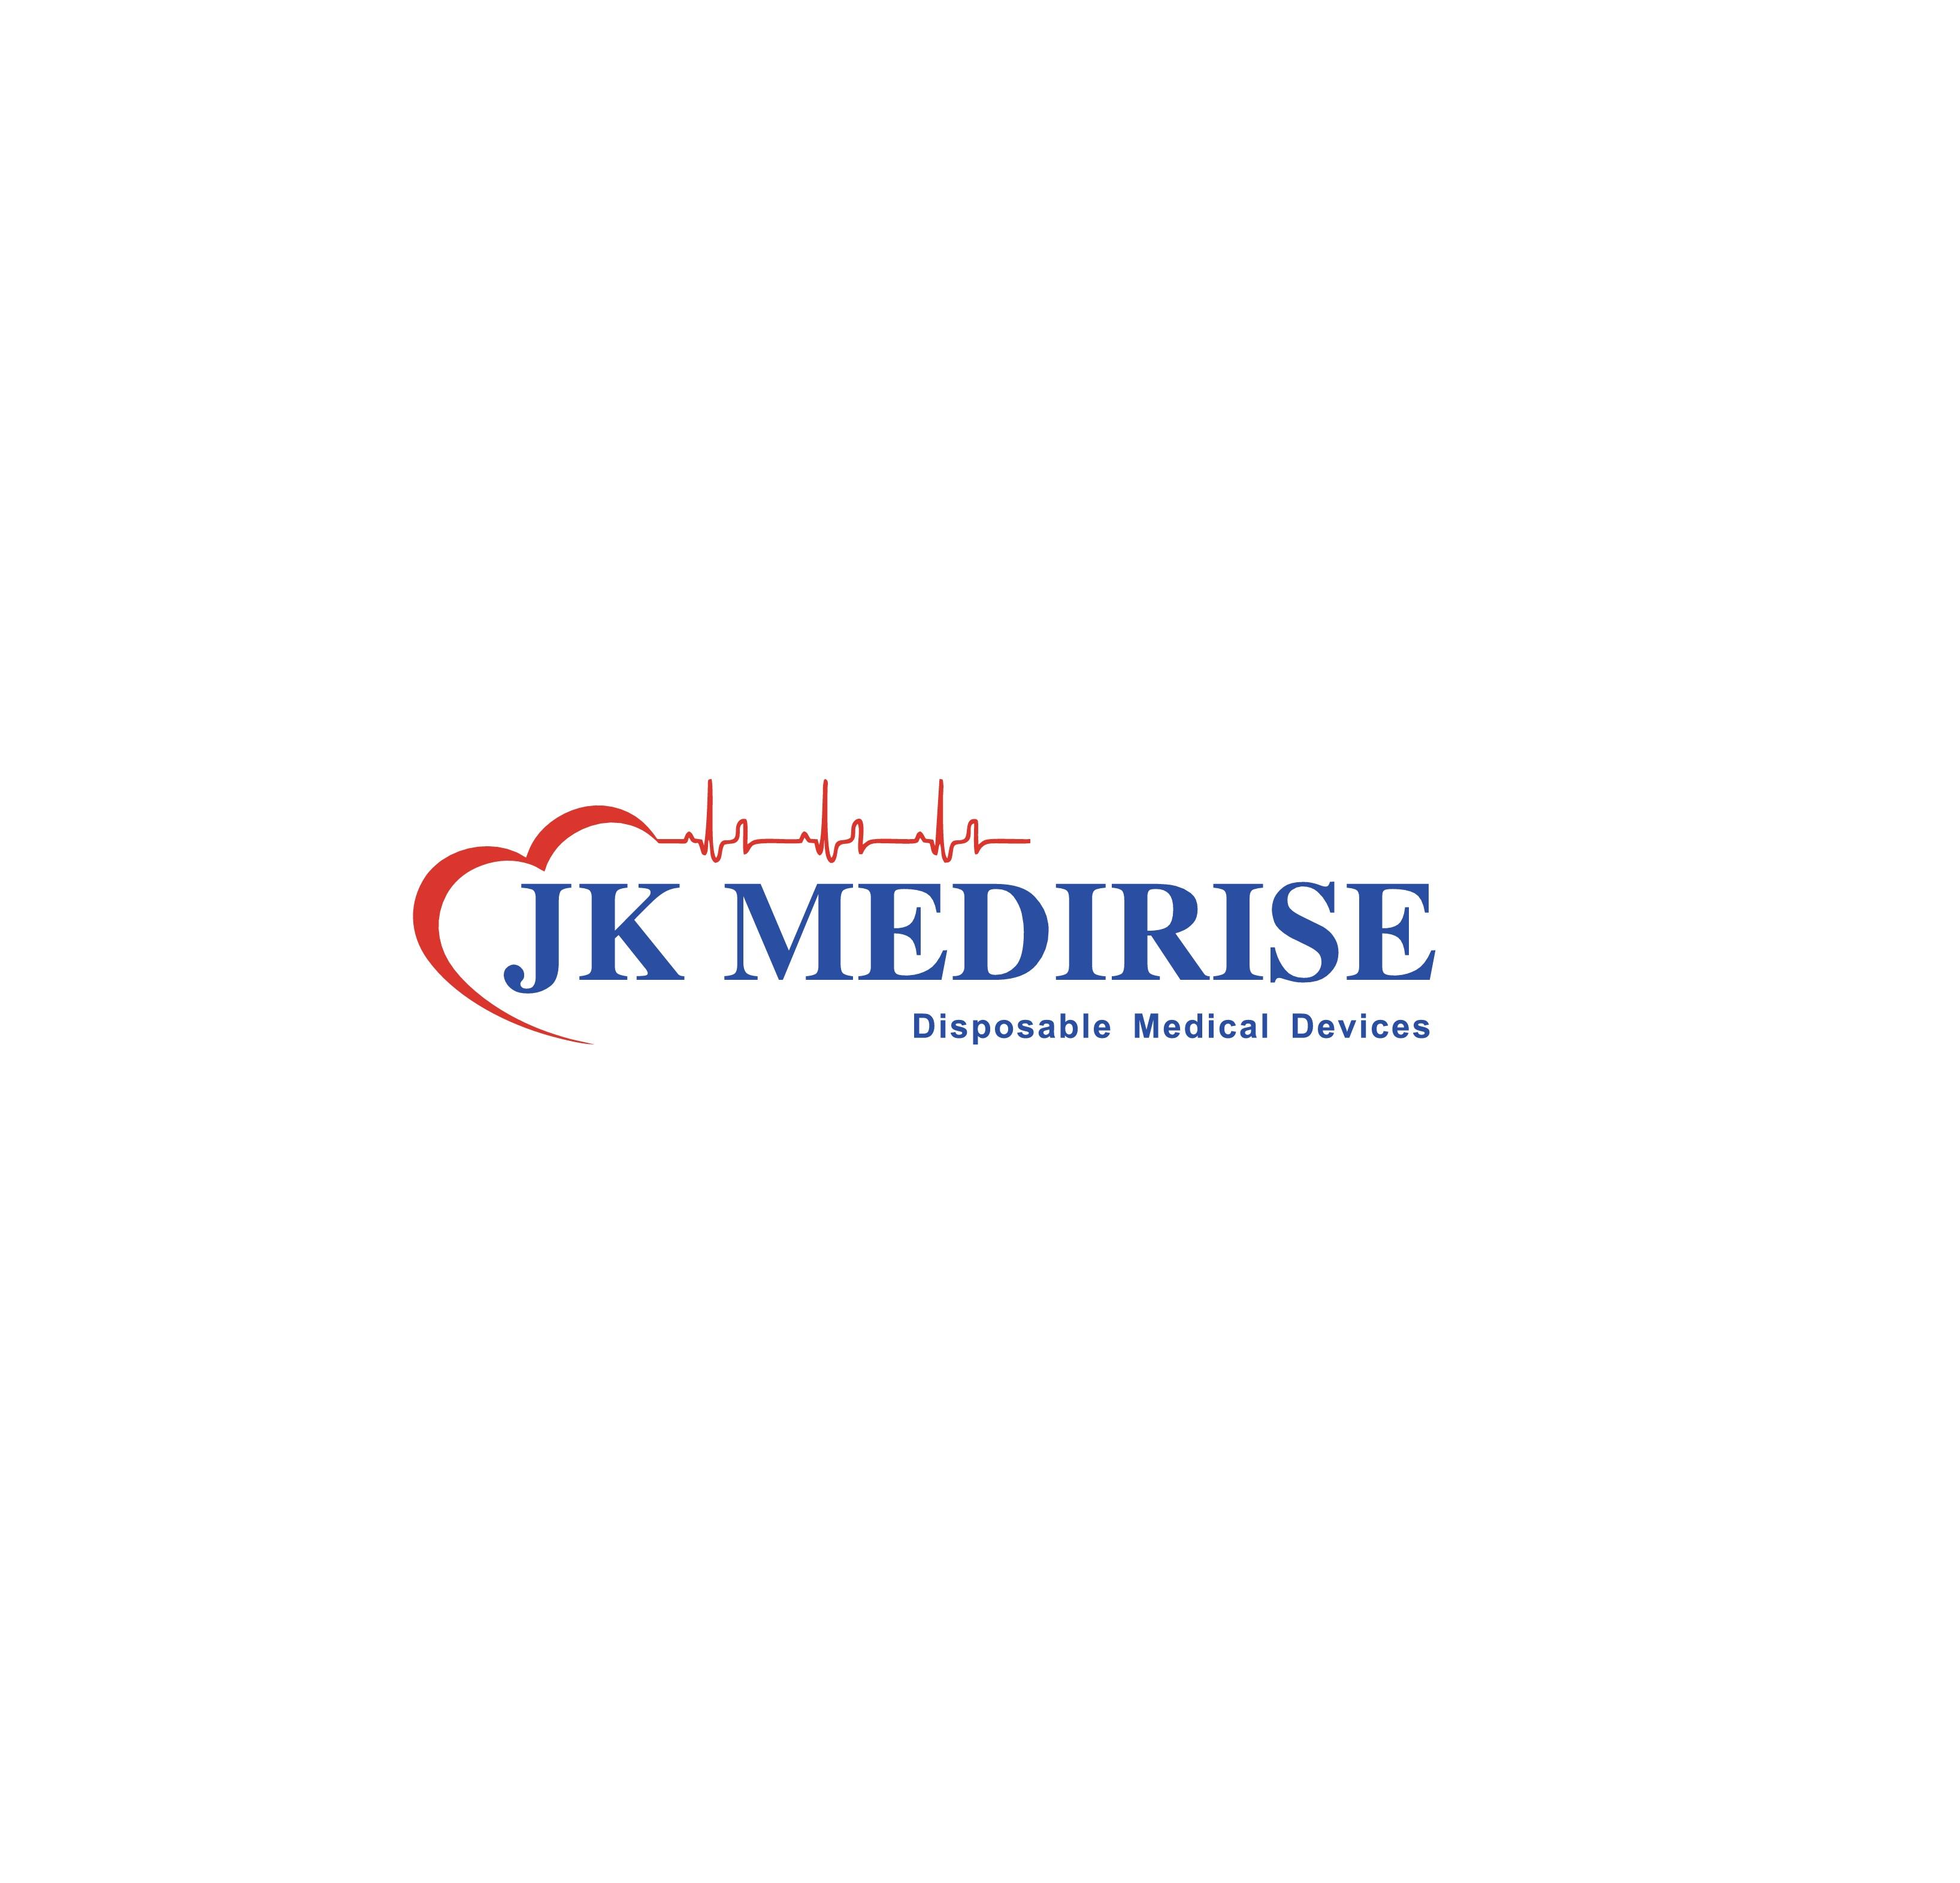 JK MEDIRISE Disposable Medical Devices